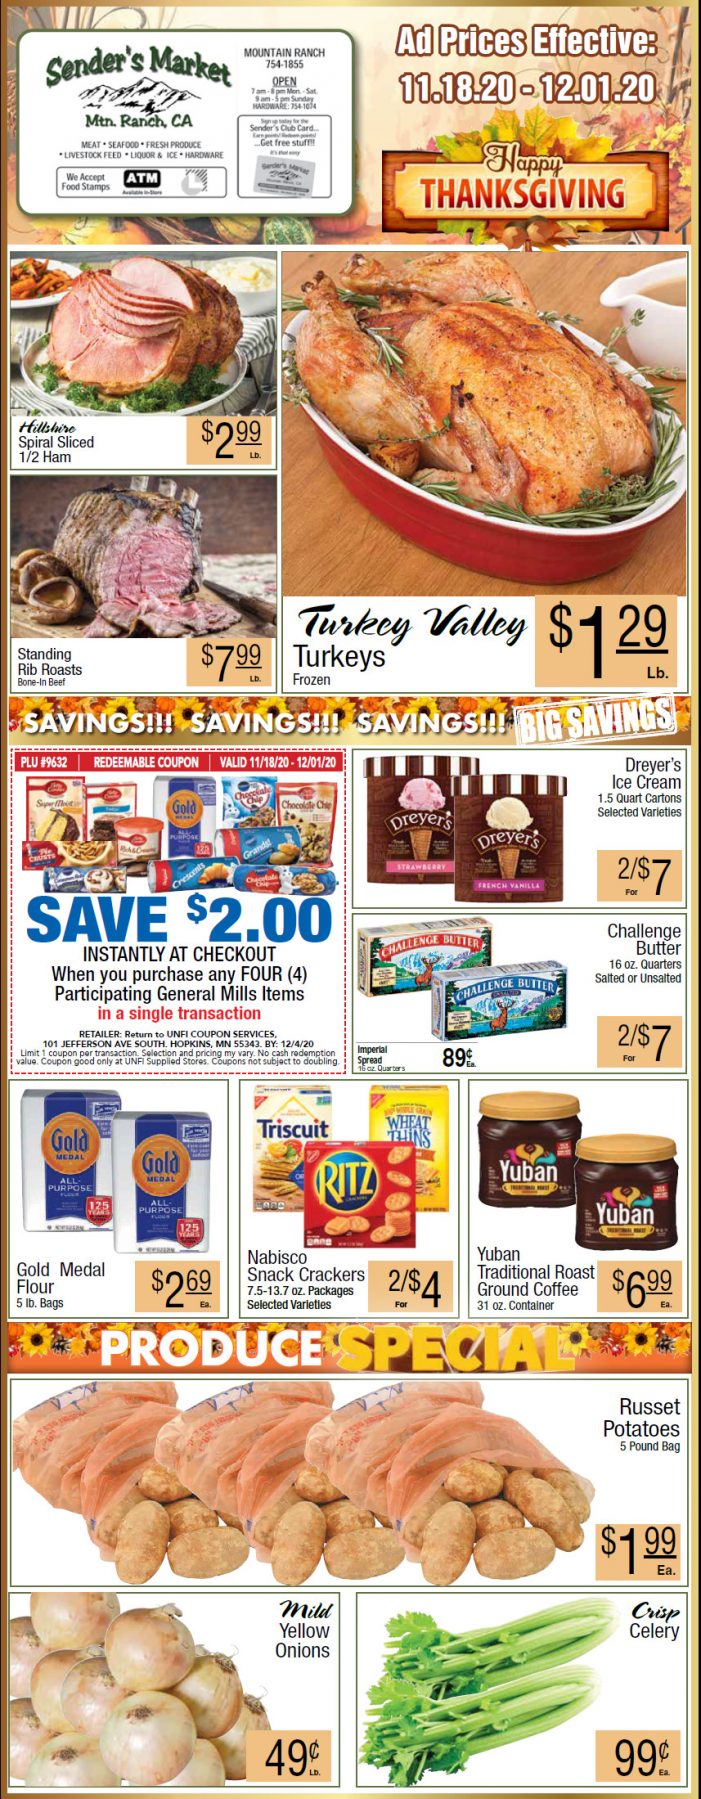 Sender’s Market’s Thanksgiving Ad & Grocery  Specials Through December 1st